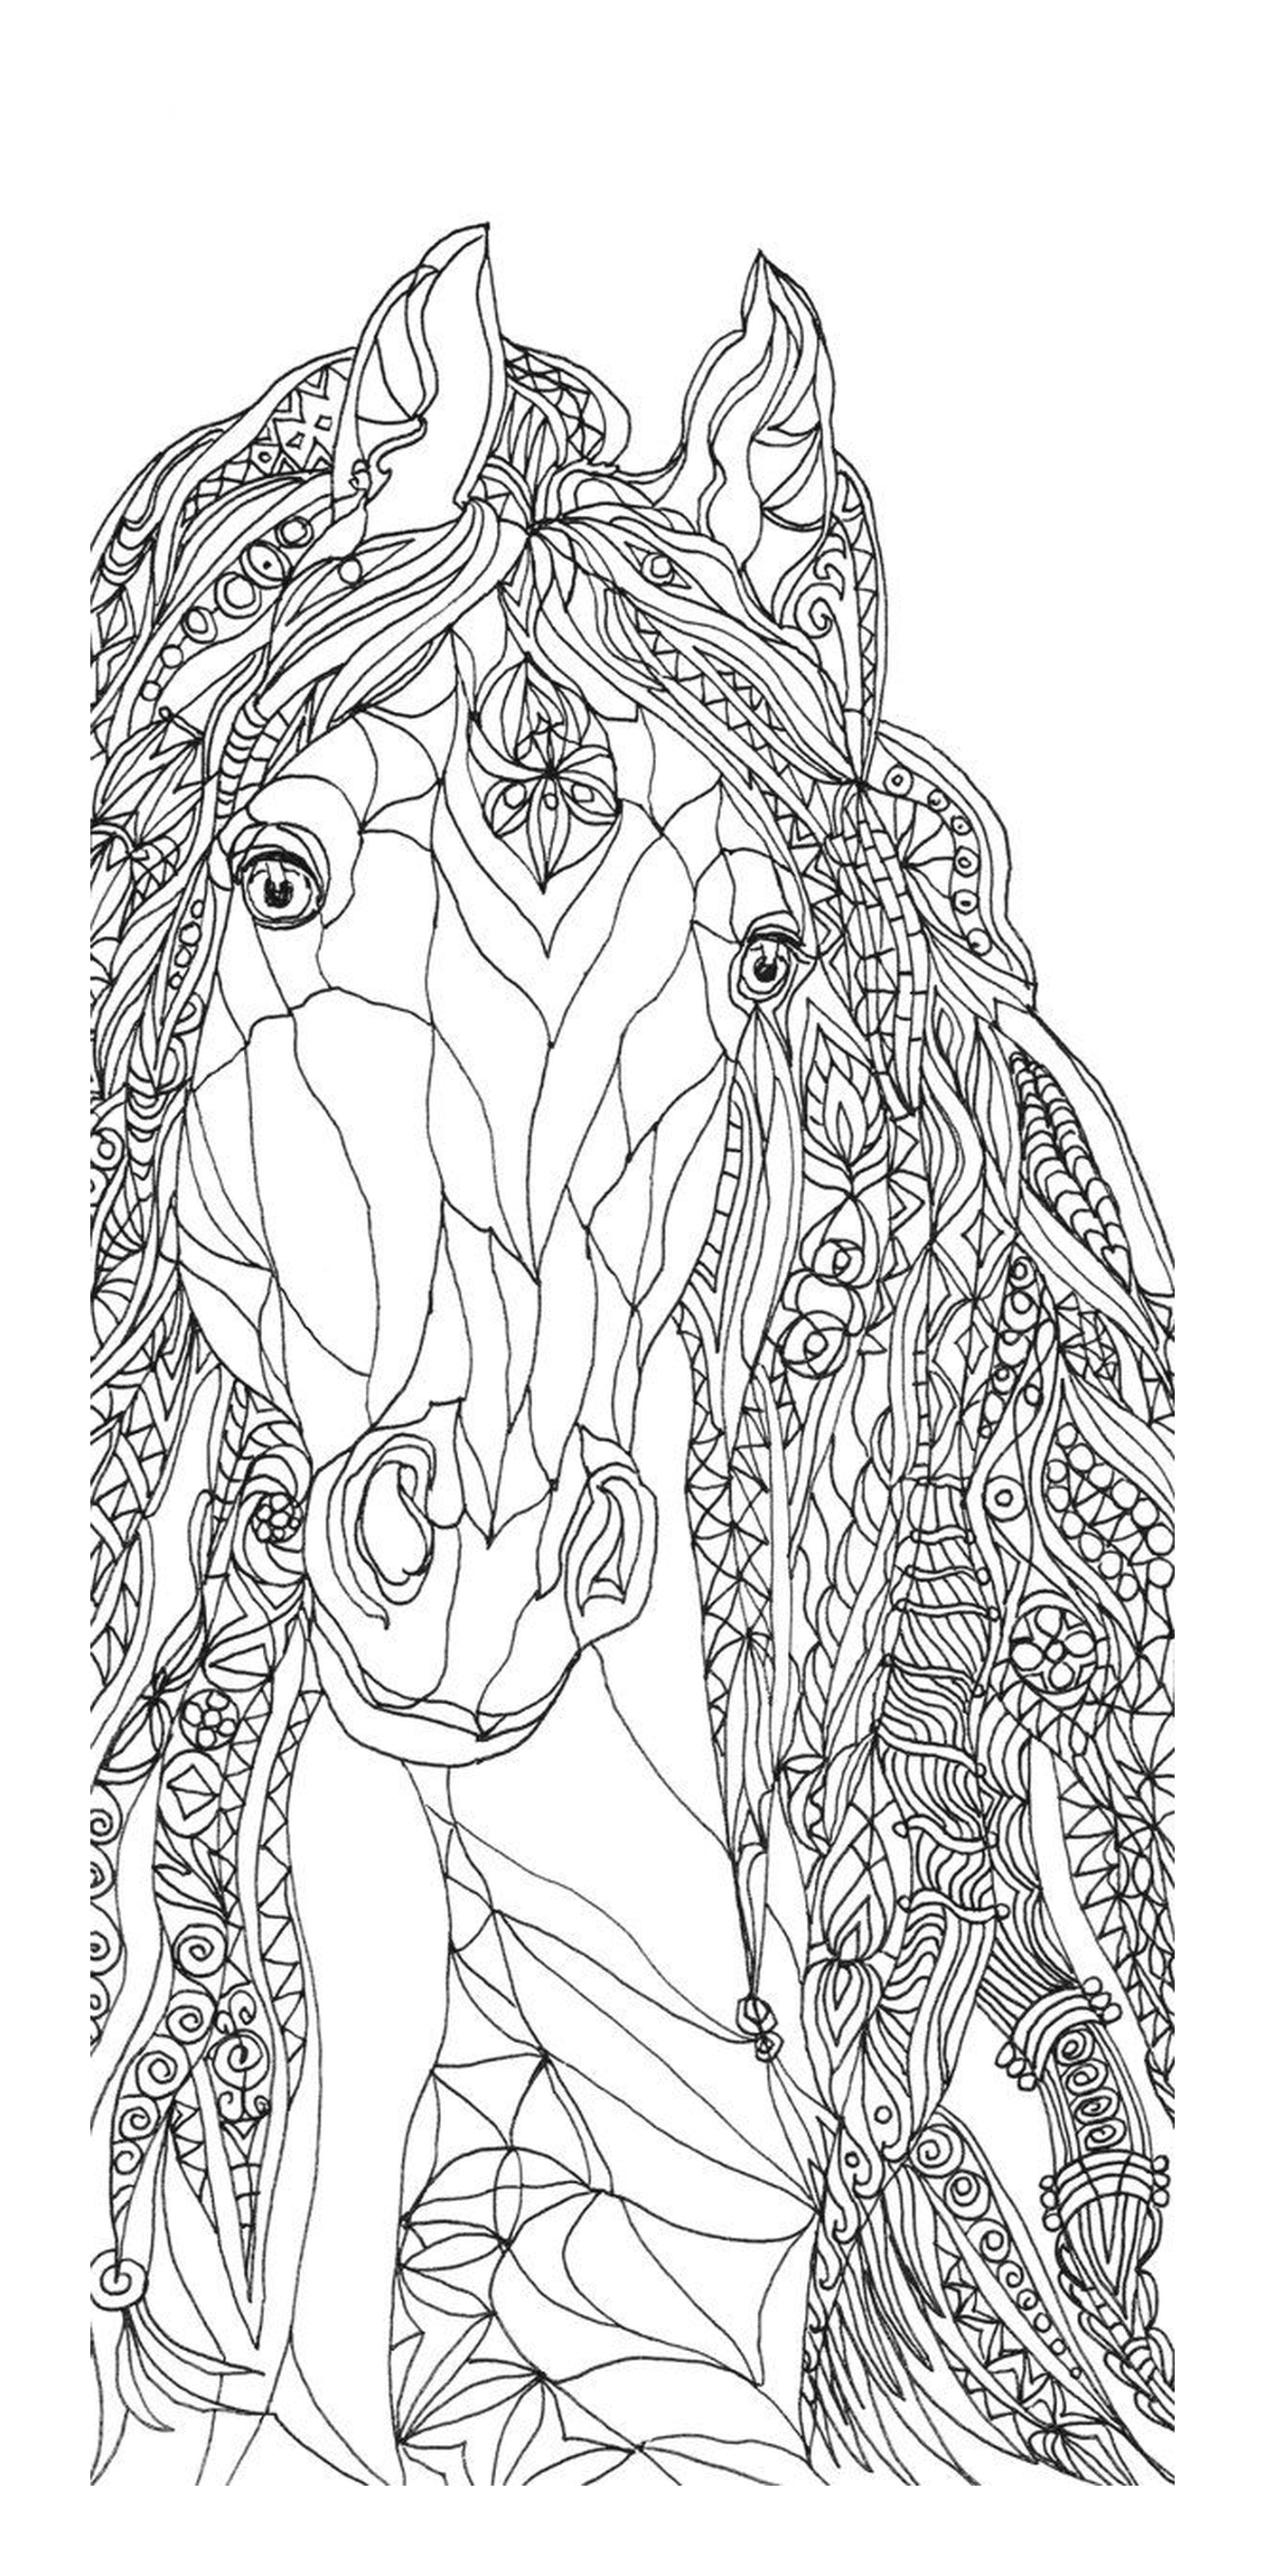  Голова лошади в стиле зентанглов 